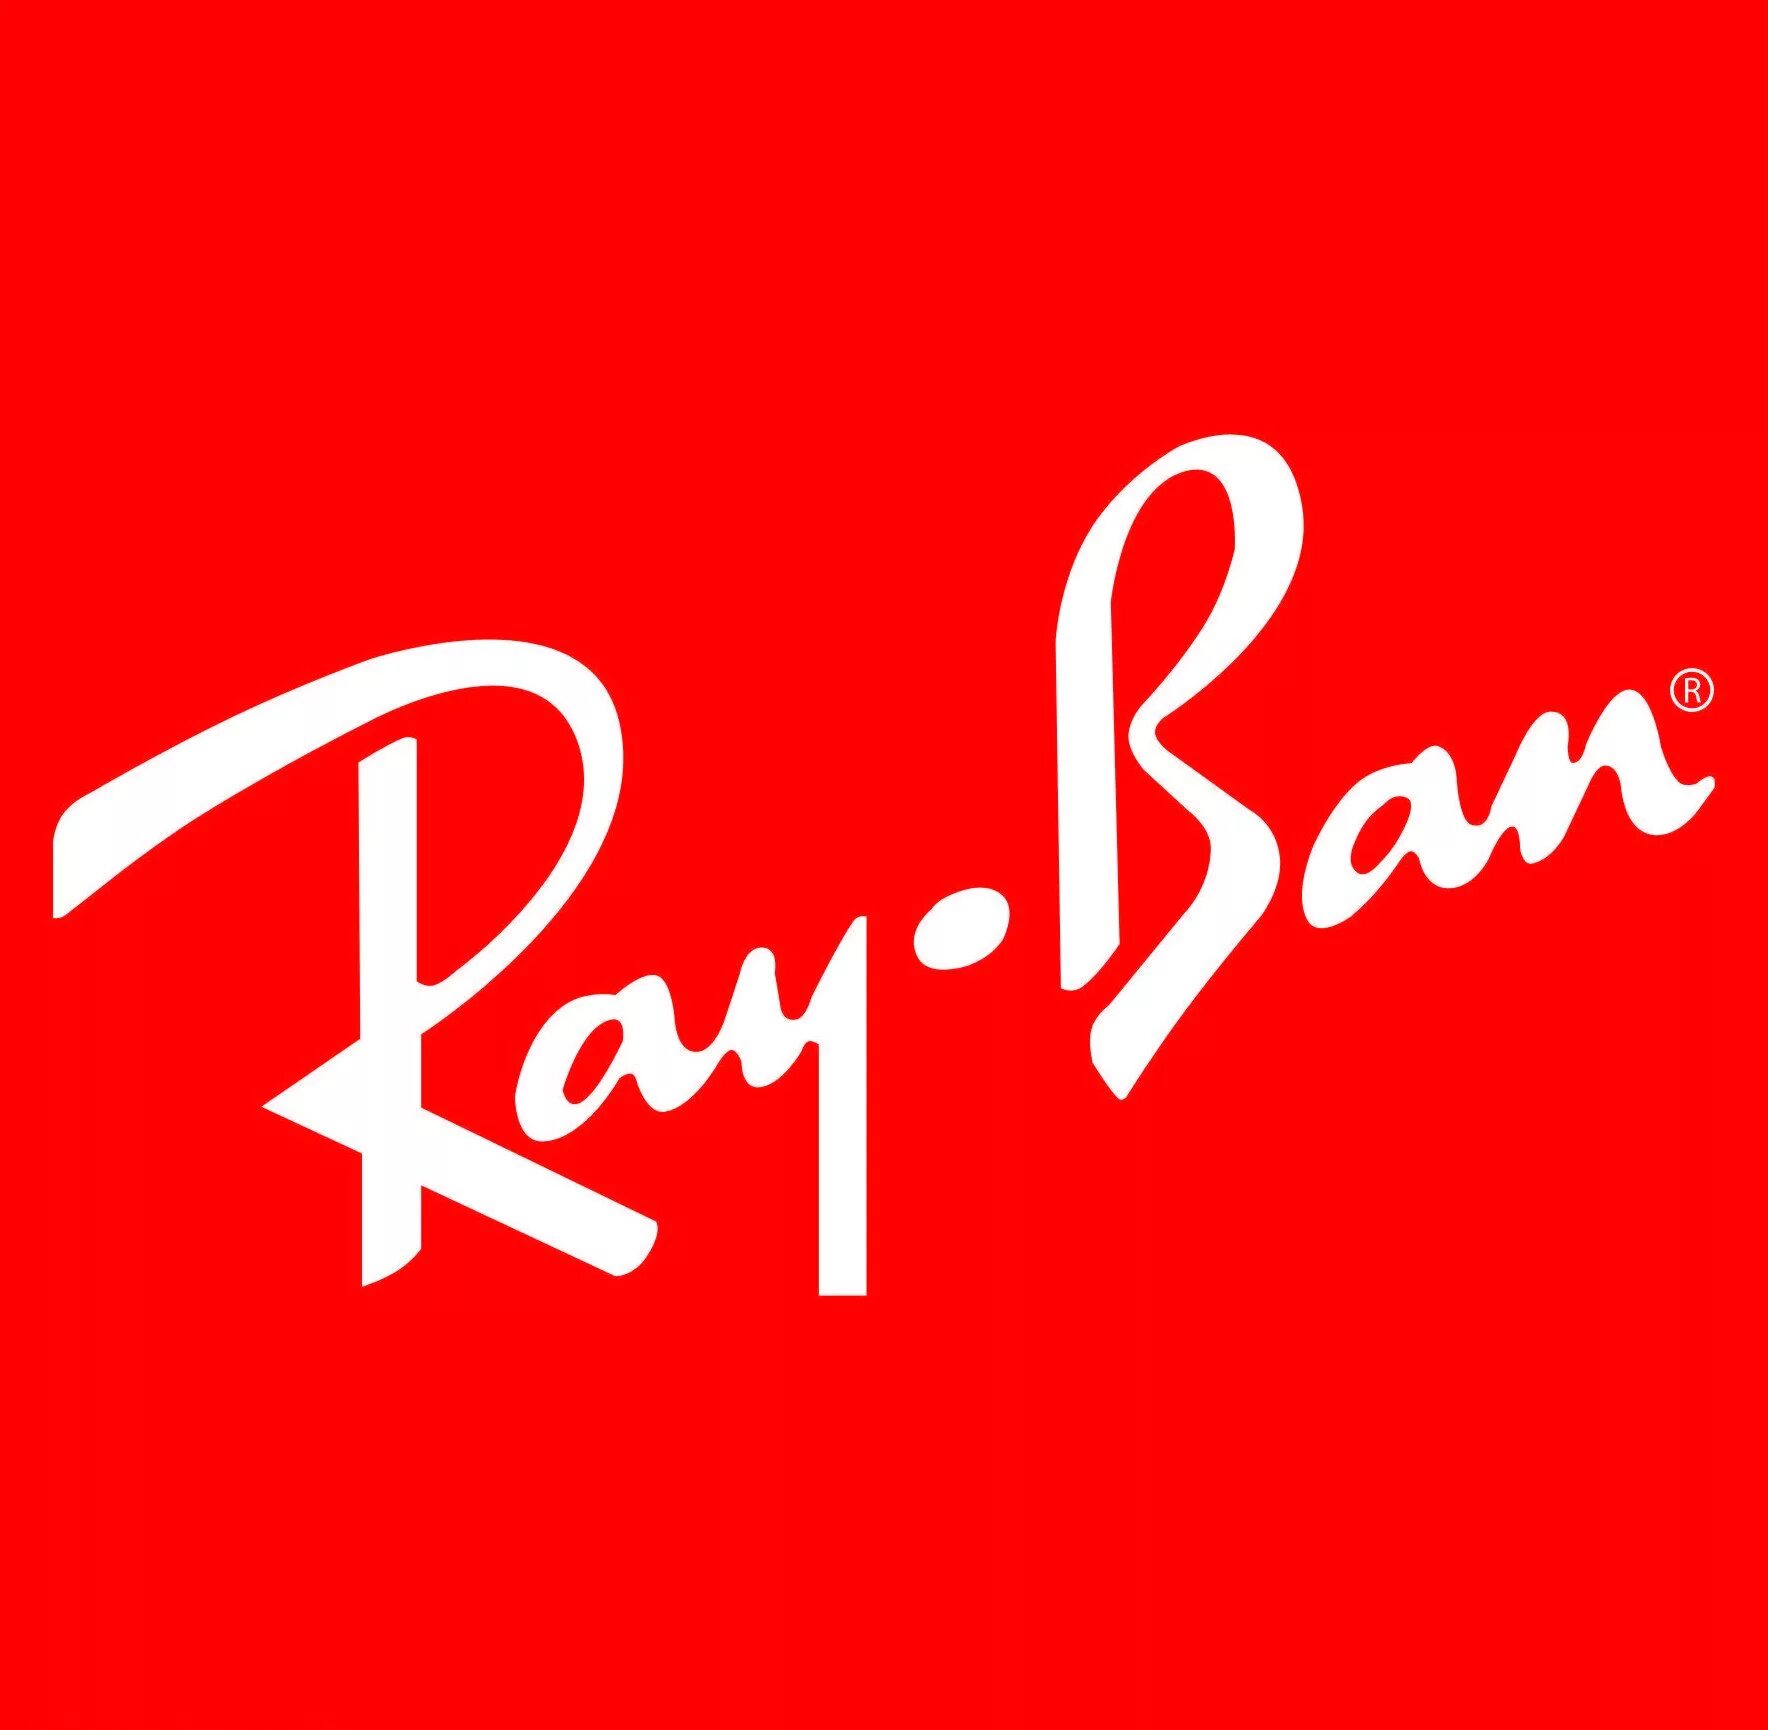 Ред бан. Ray ban logo. Ray ban очки logo. Логотип очков ray ban.